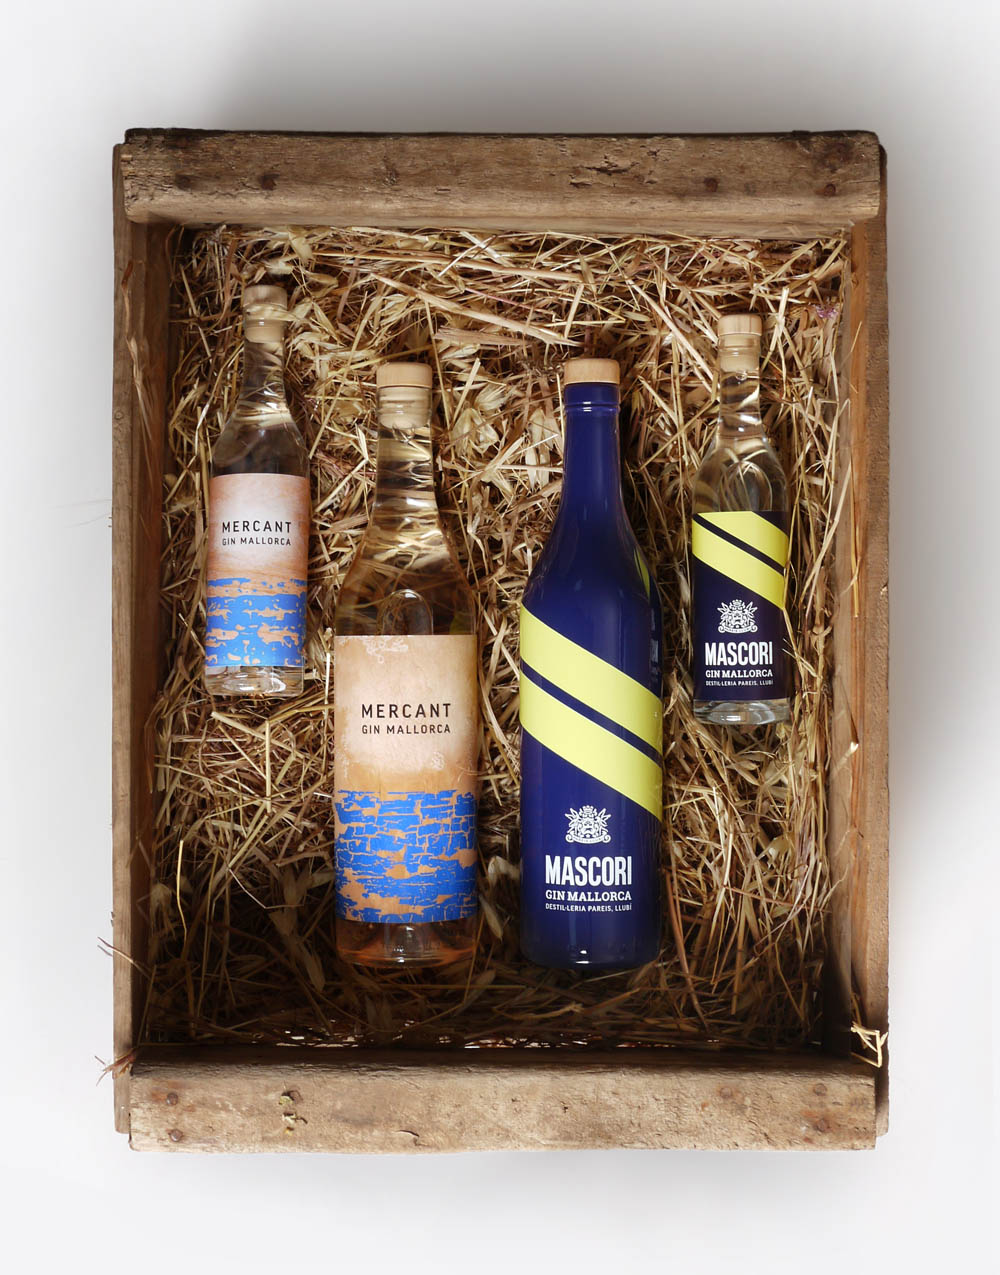 gin-gift-set-box-handcraft-products-bottles-liquor-shop-originale-handwerker-geschenke